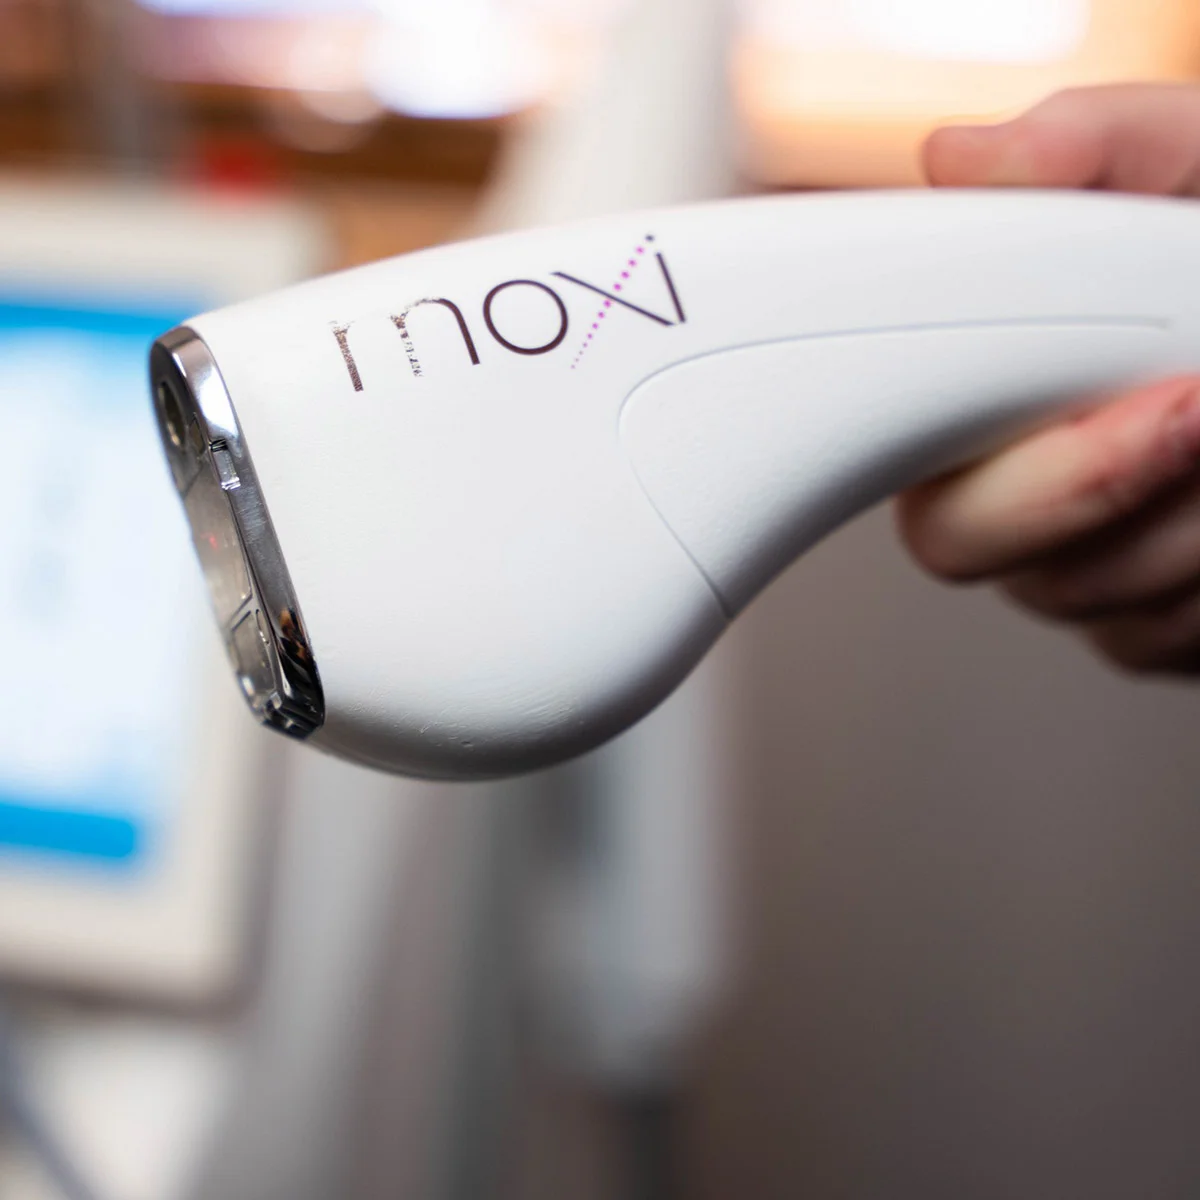 MOXI Laser Treatment instrument close up